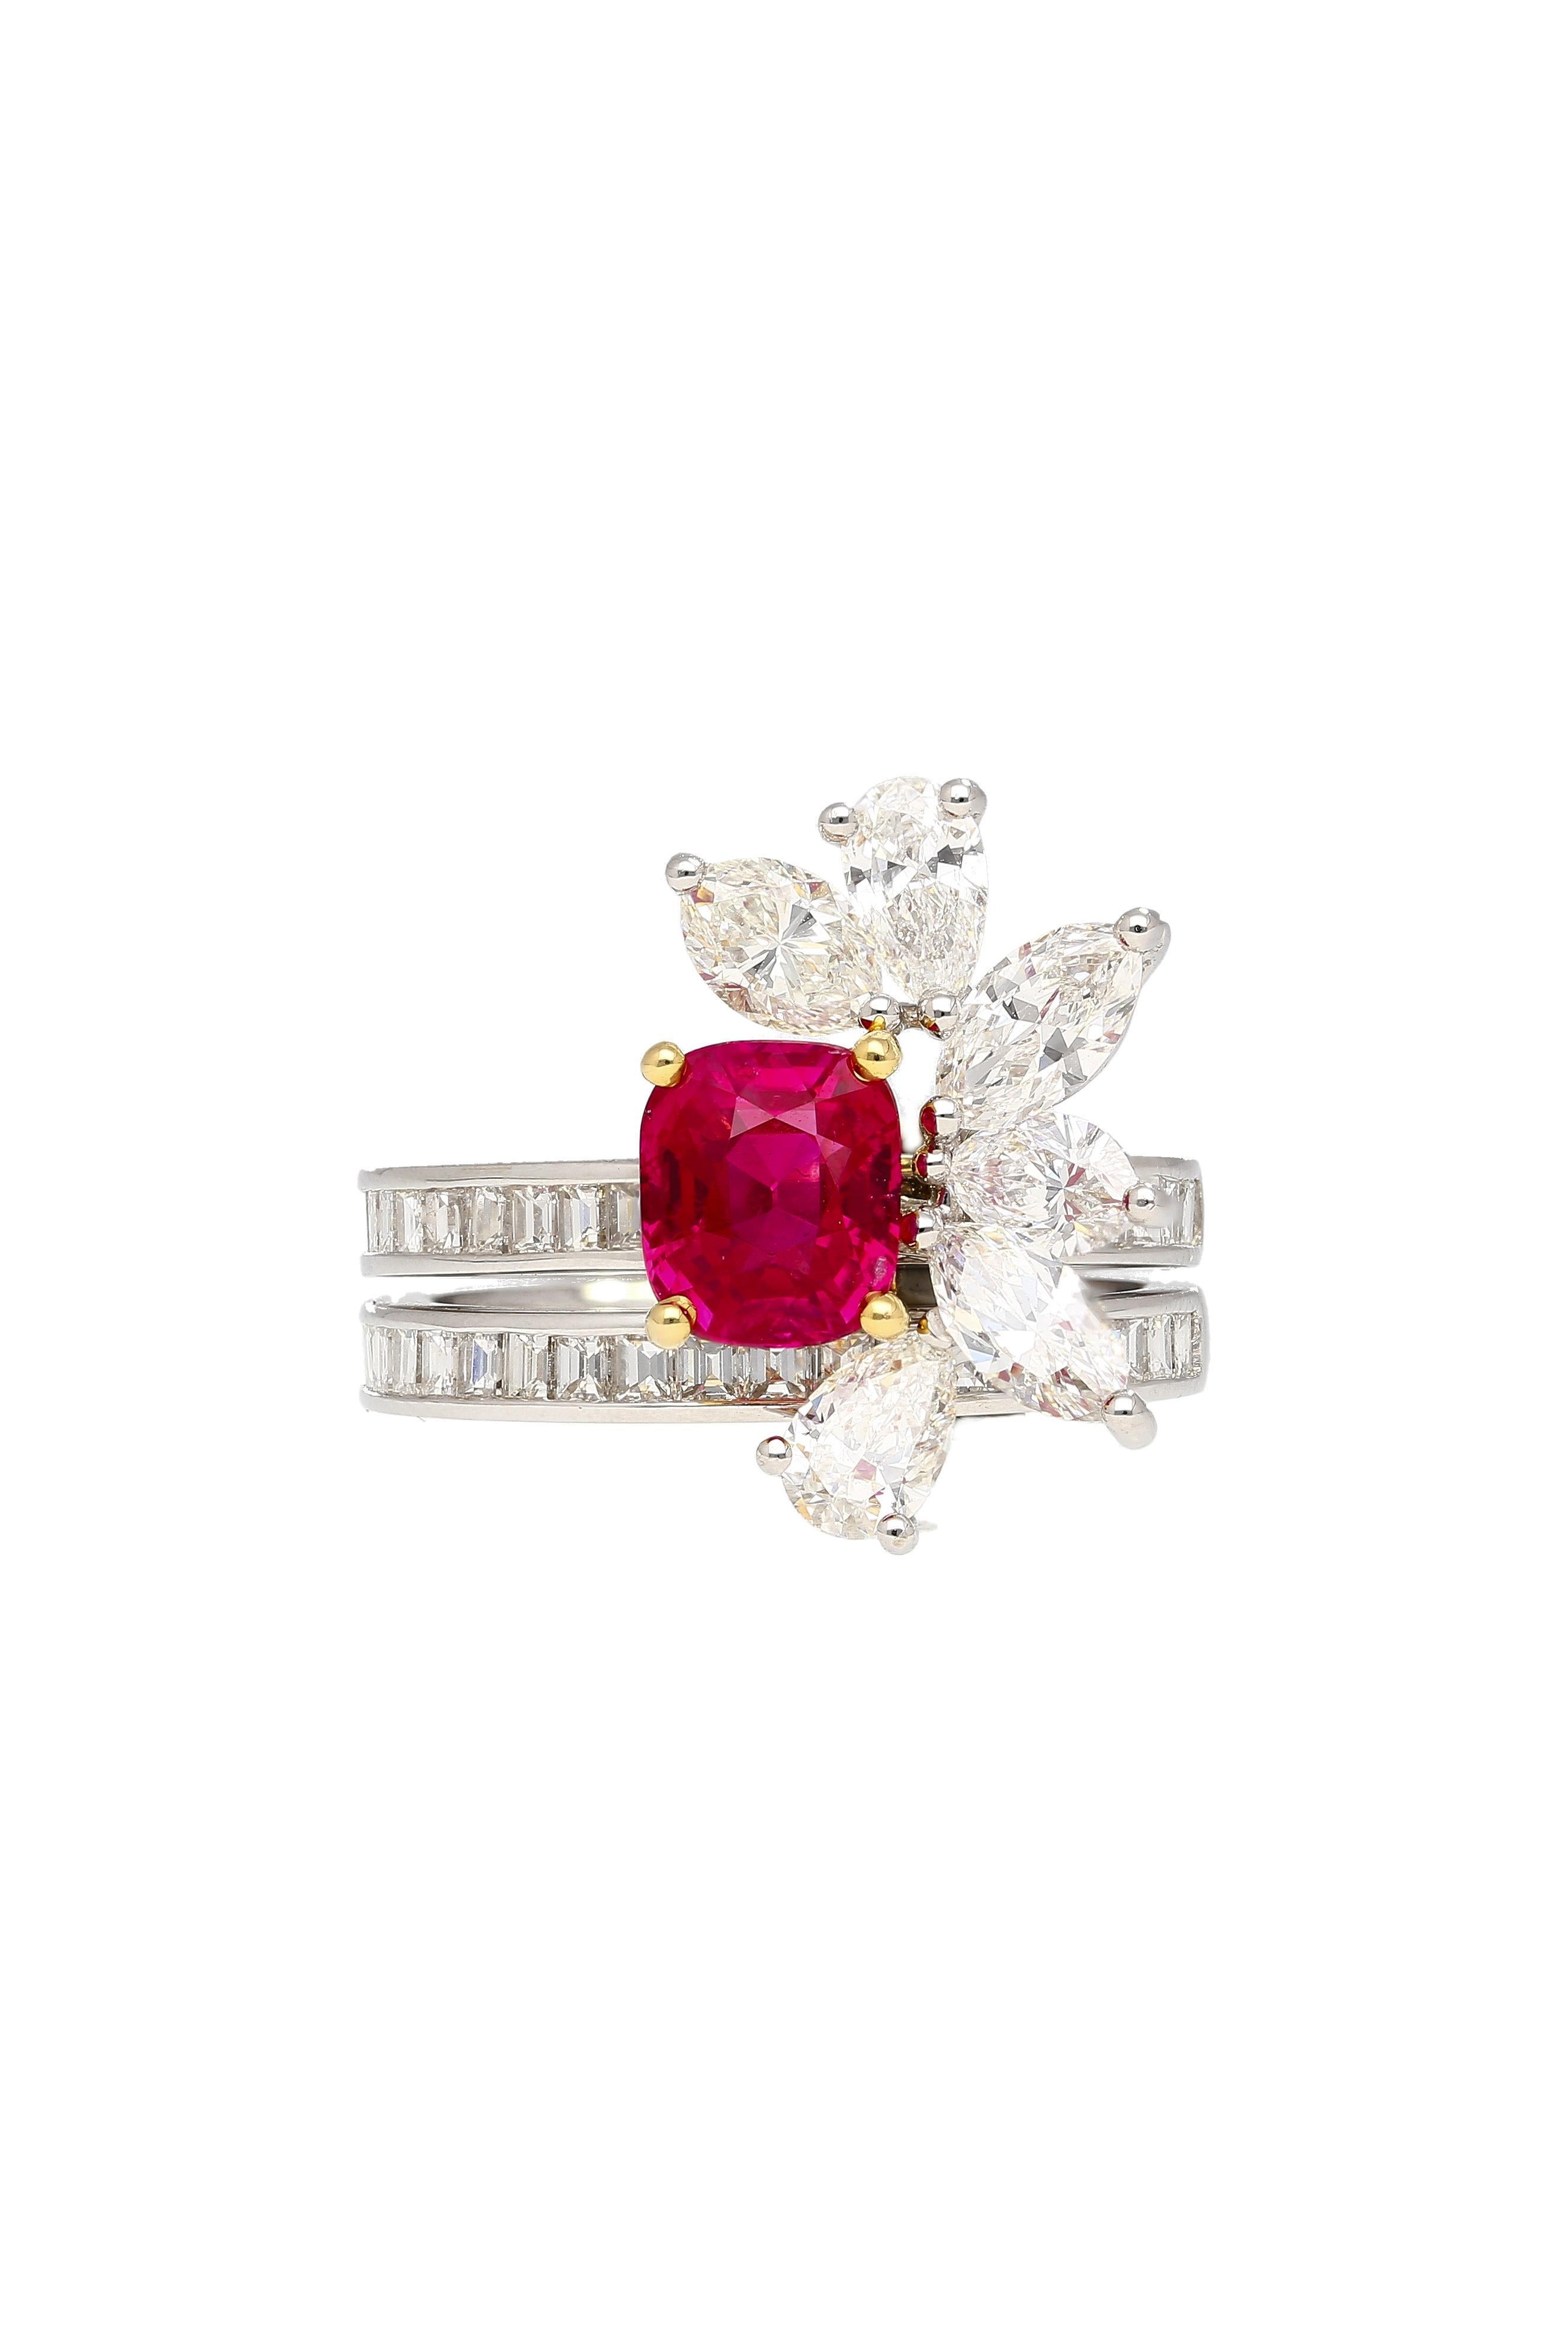 Art Nouveau AGL Certified 8 Carat No Heat Kashmir Sapphire, Burma Ruby, & Diamond Stack Ring For Sale